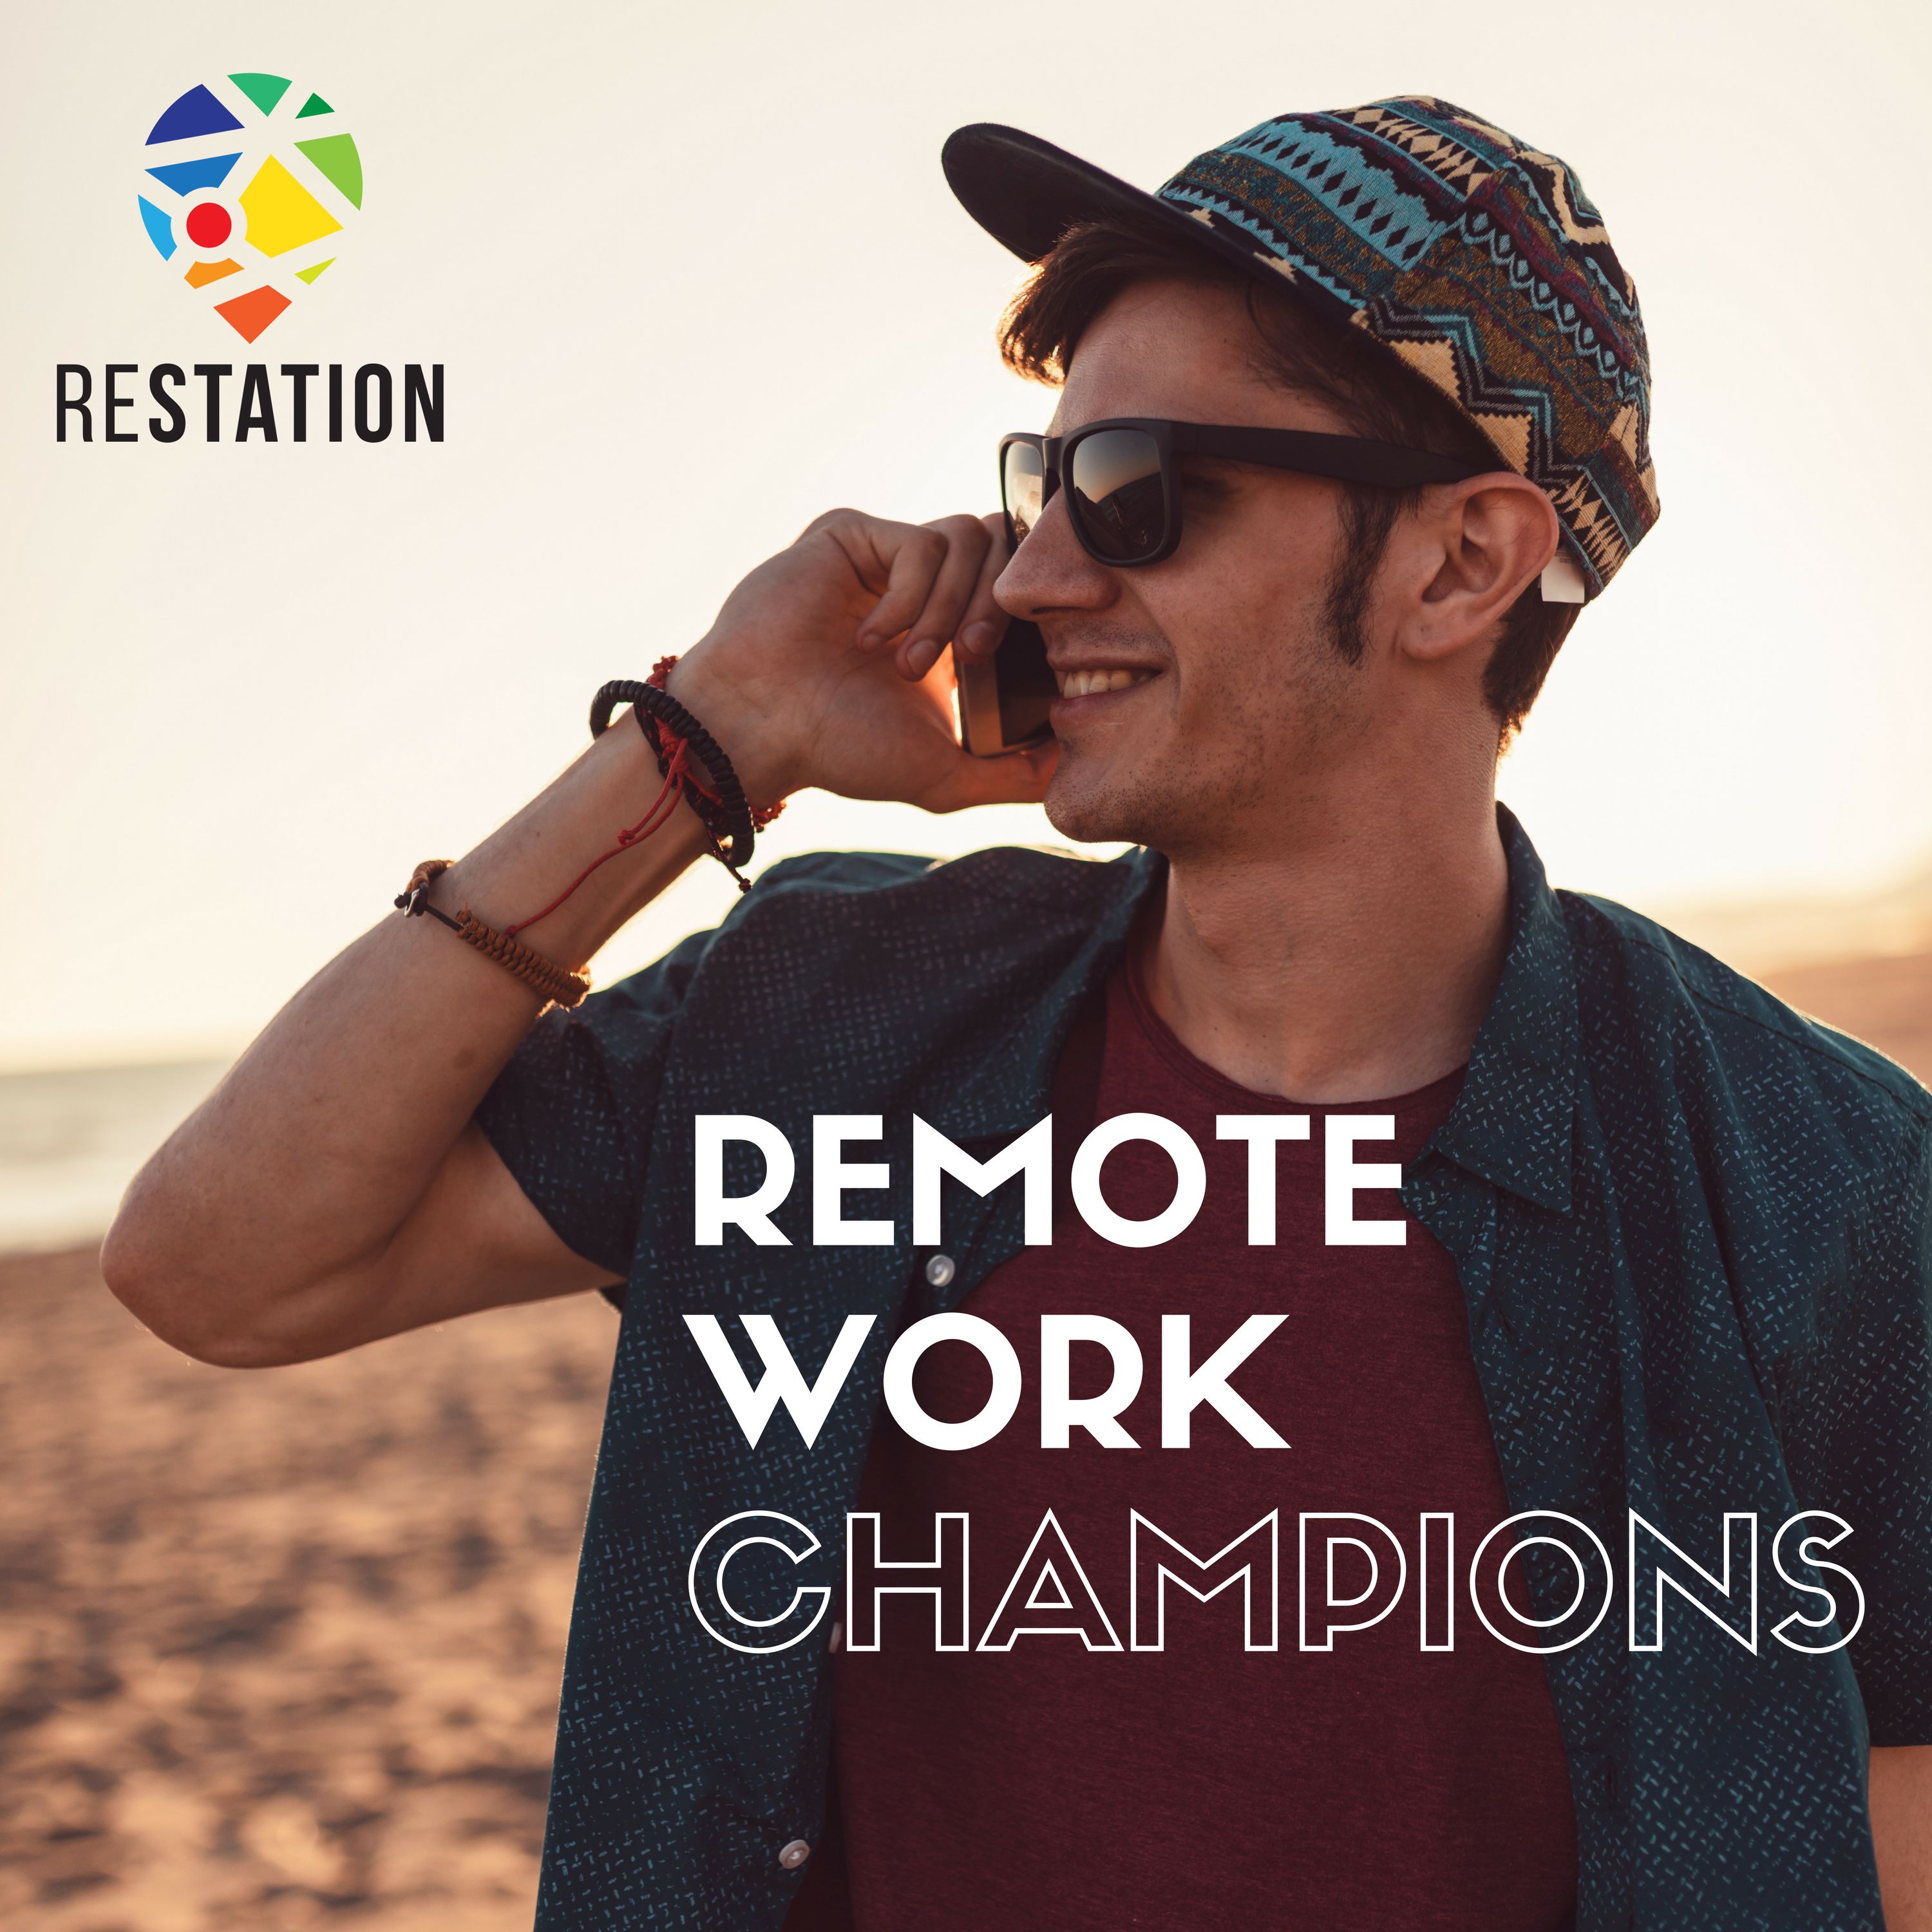 Remote work champions